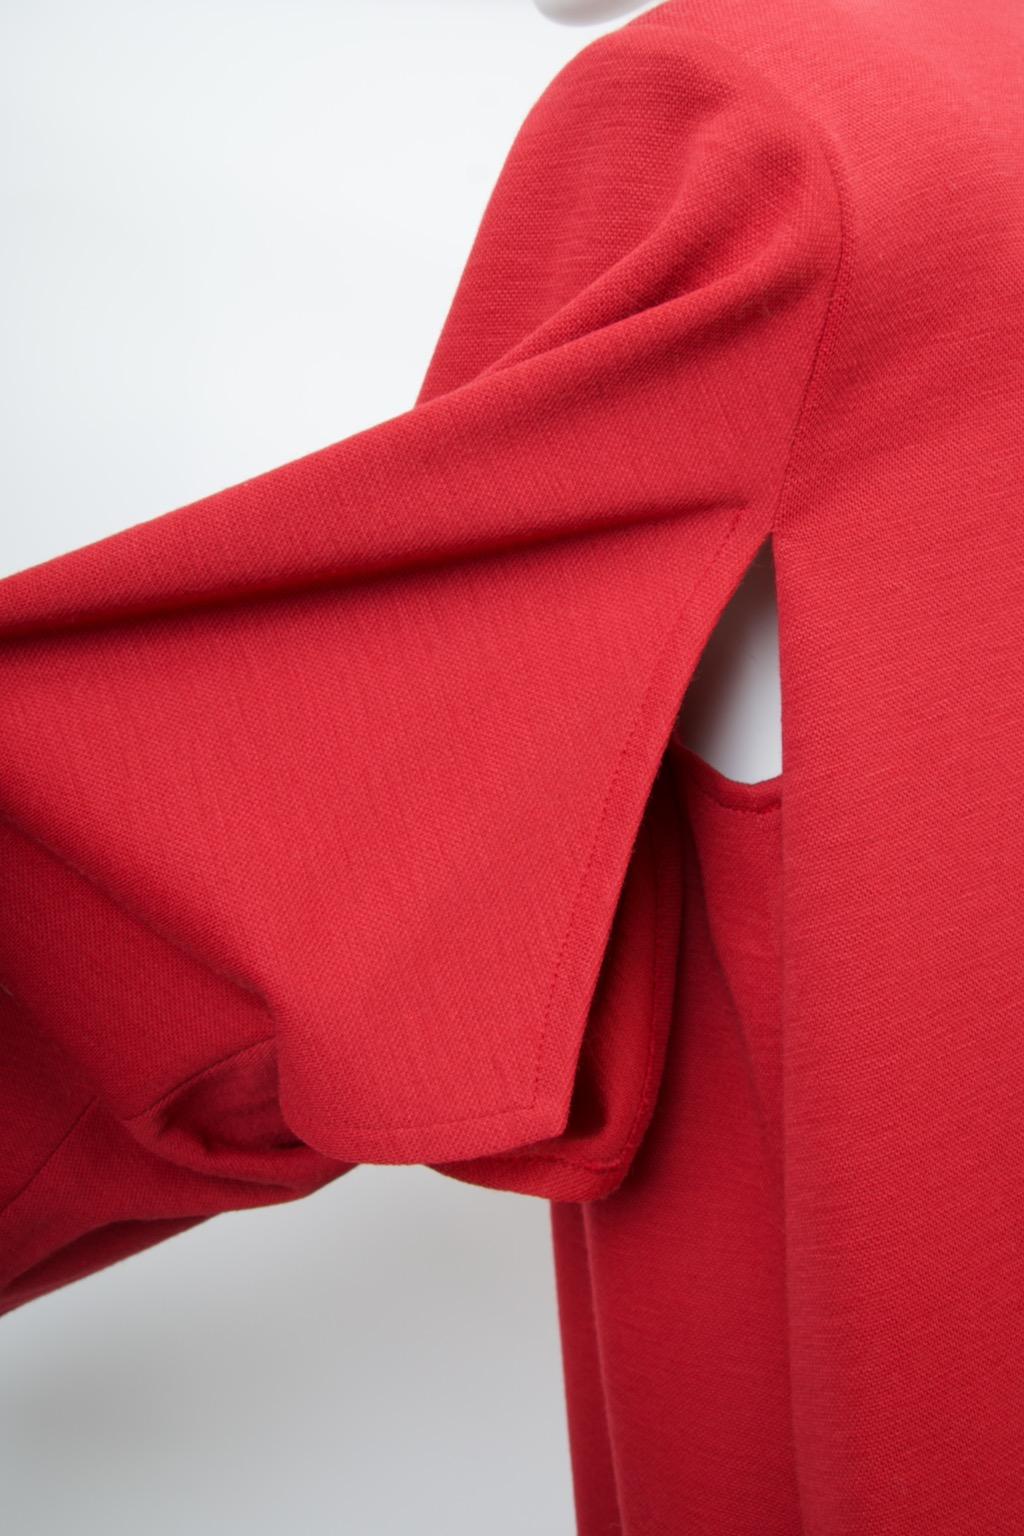 Sonia Rykiel Red Knit Coat/Dress For Sale 1